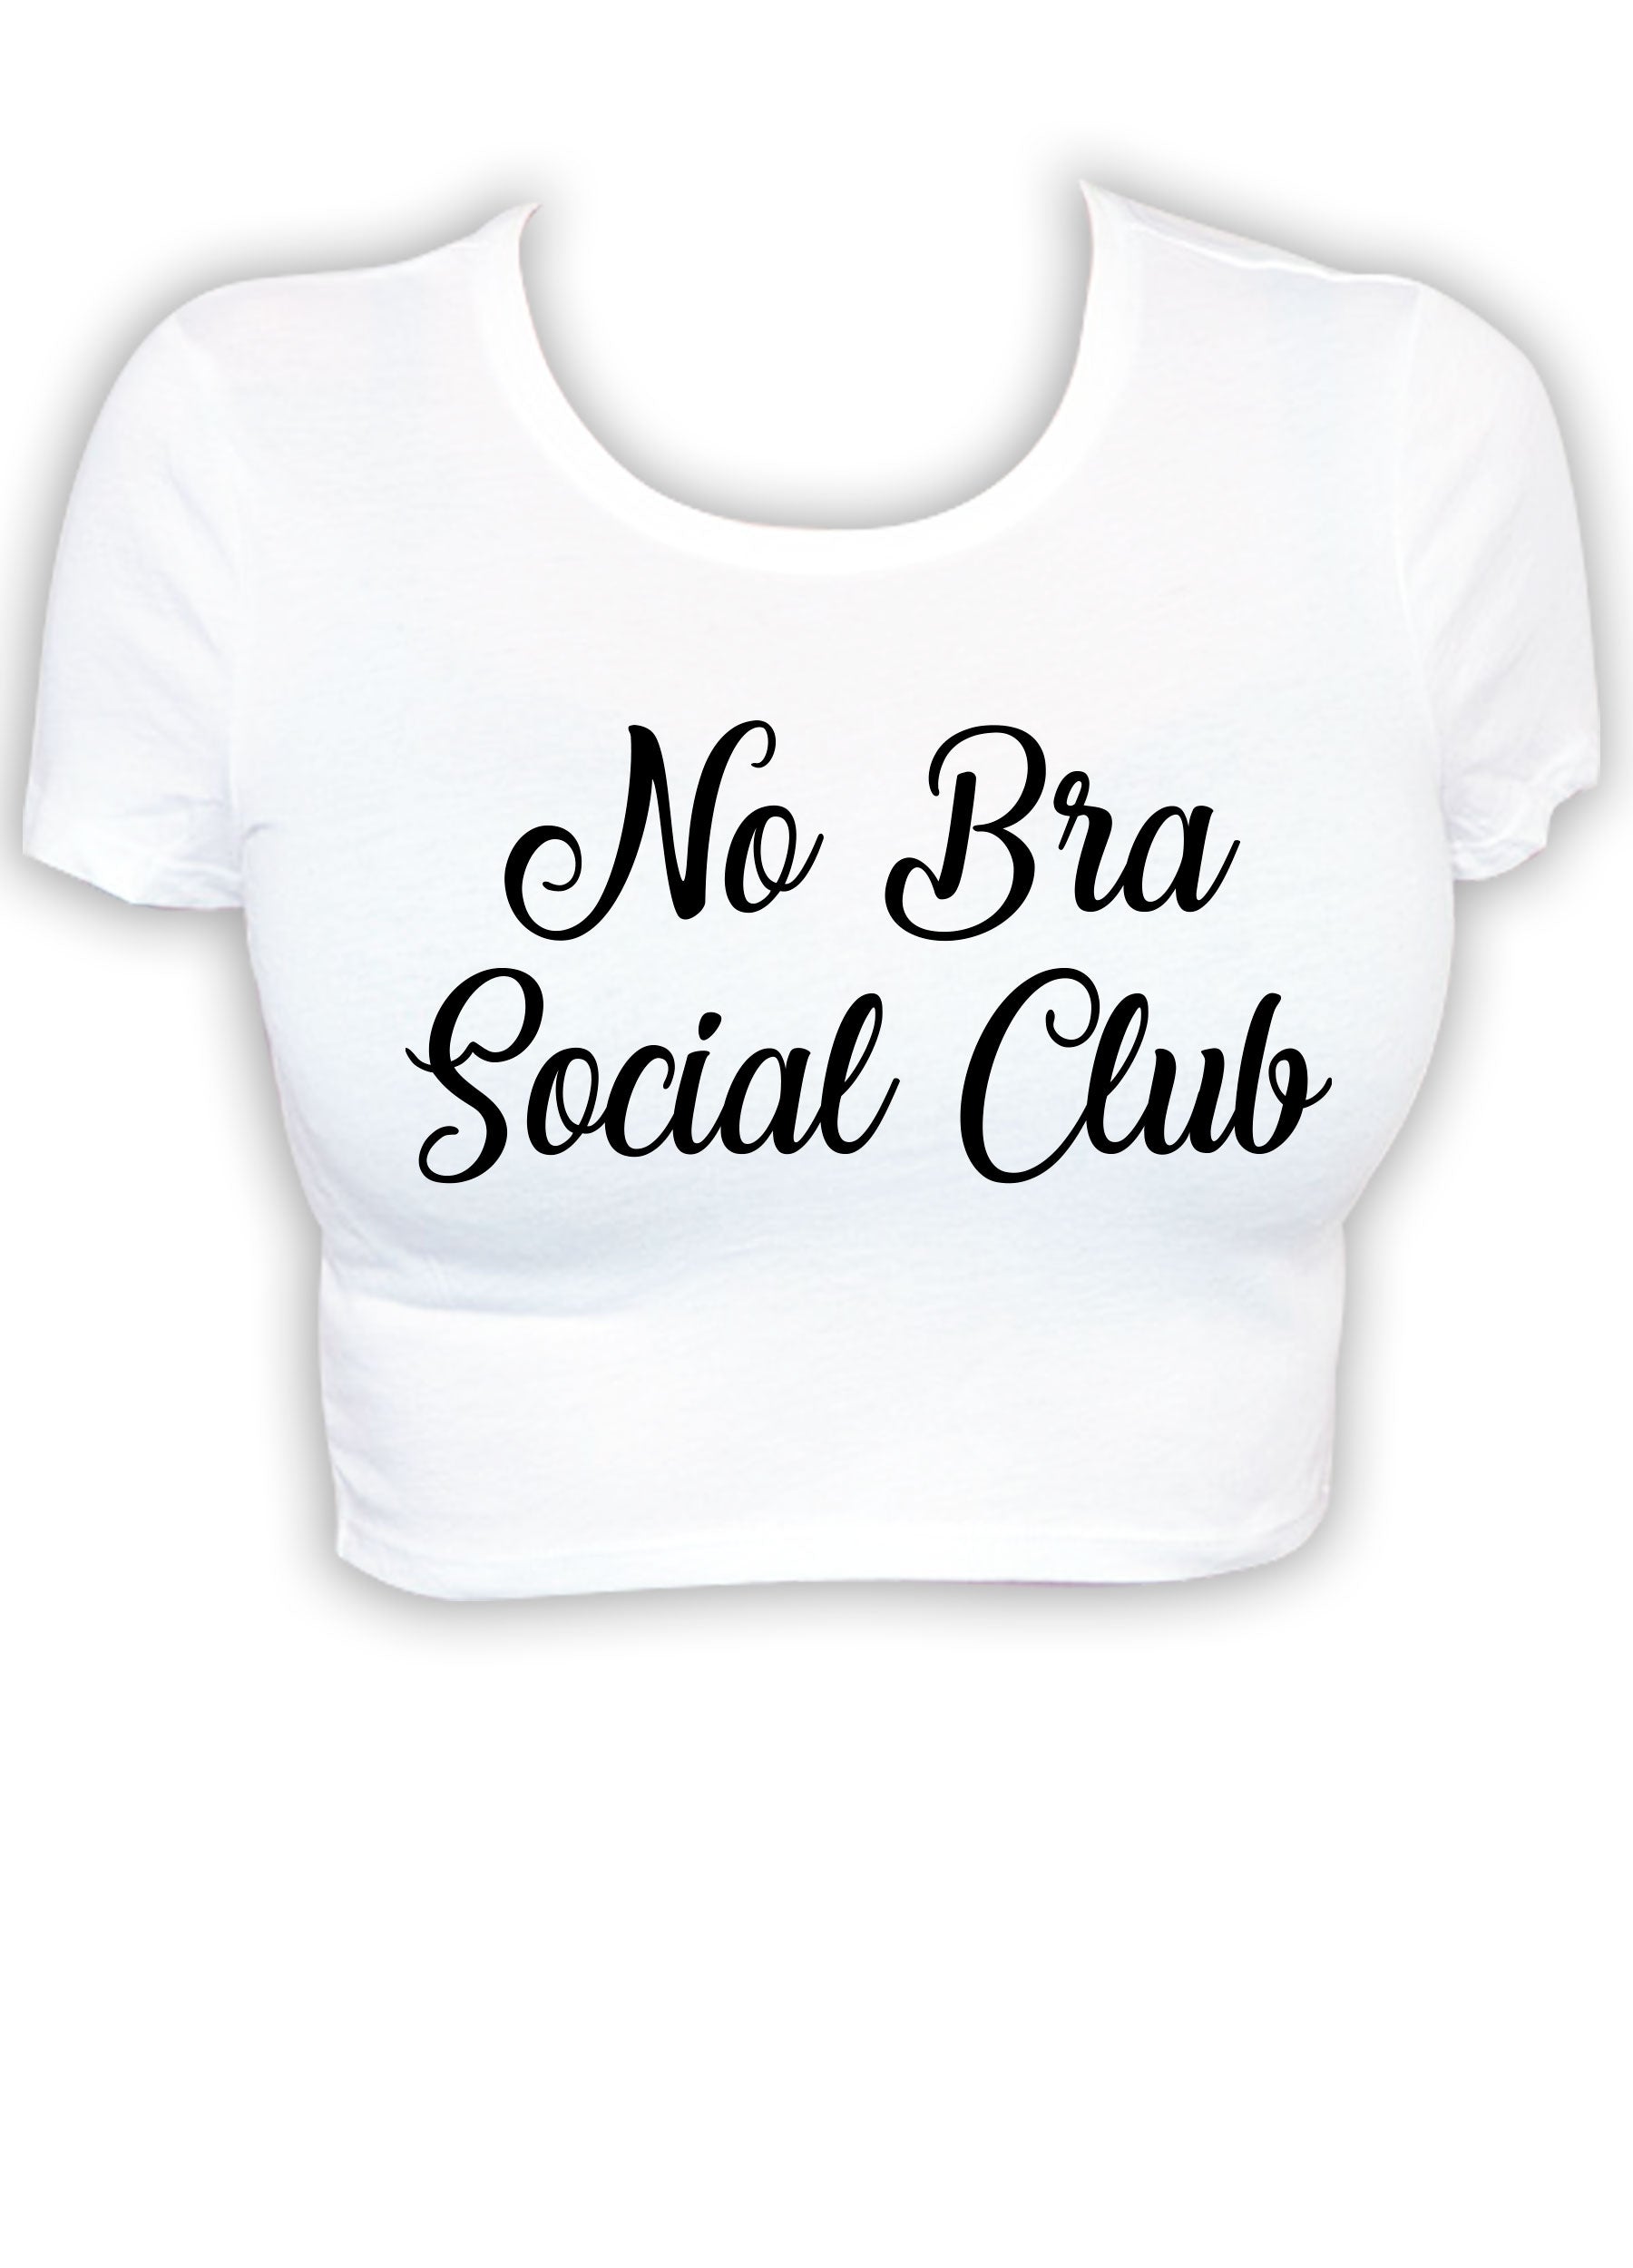 No Bra Club T-Shirt In White